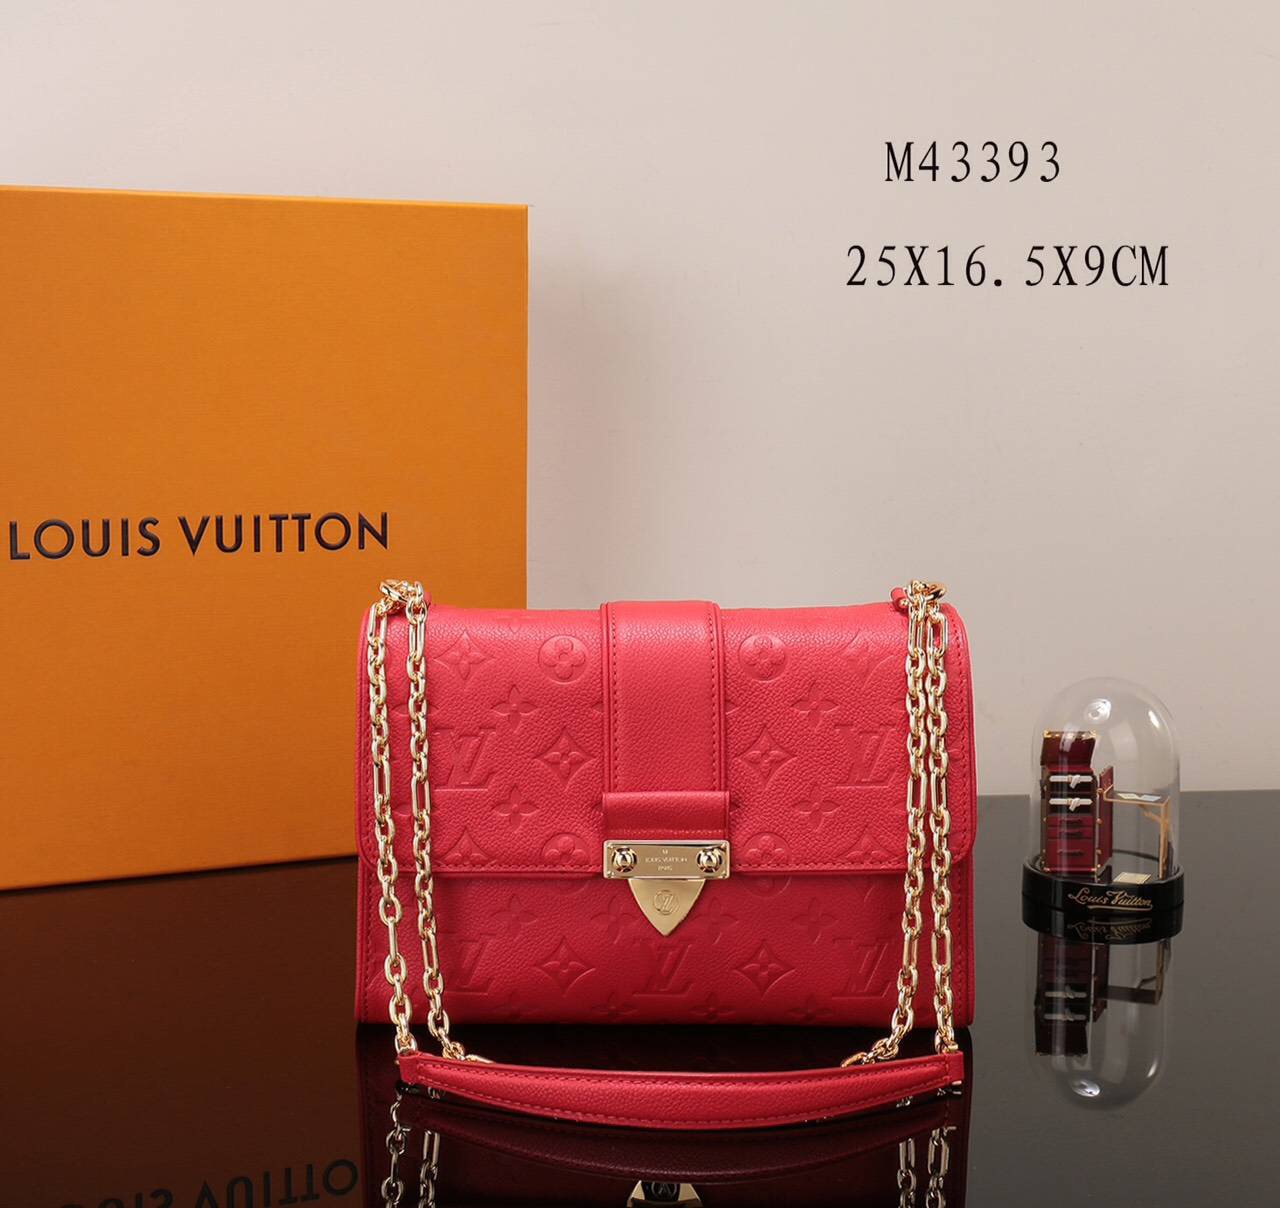 LV Louis Vuitton Saint Sulpice Monogram Real M43393 Handbags bags Red - $354.00 : Luxury Shop